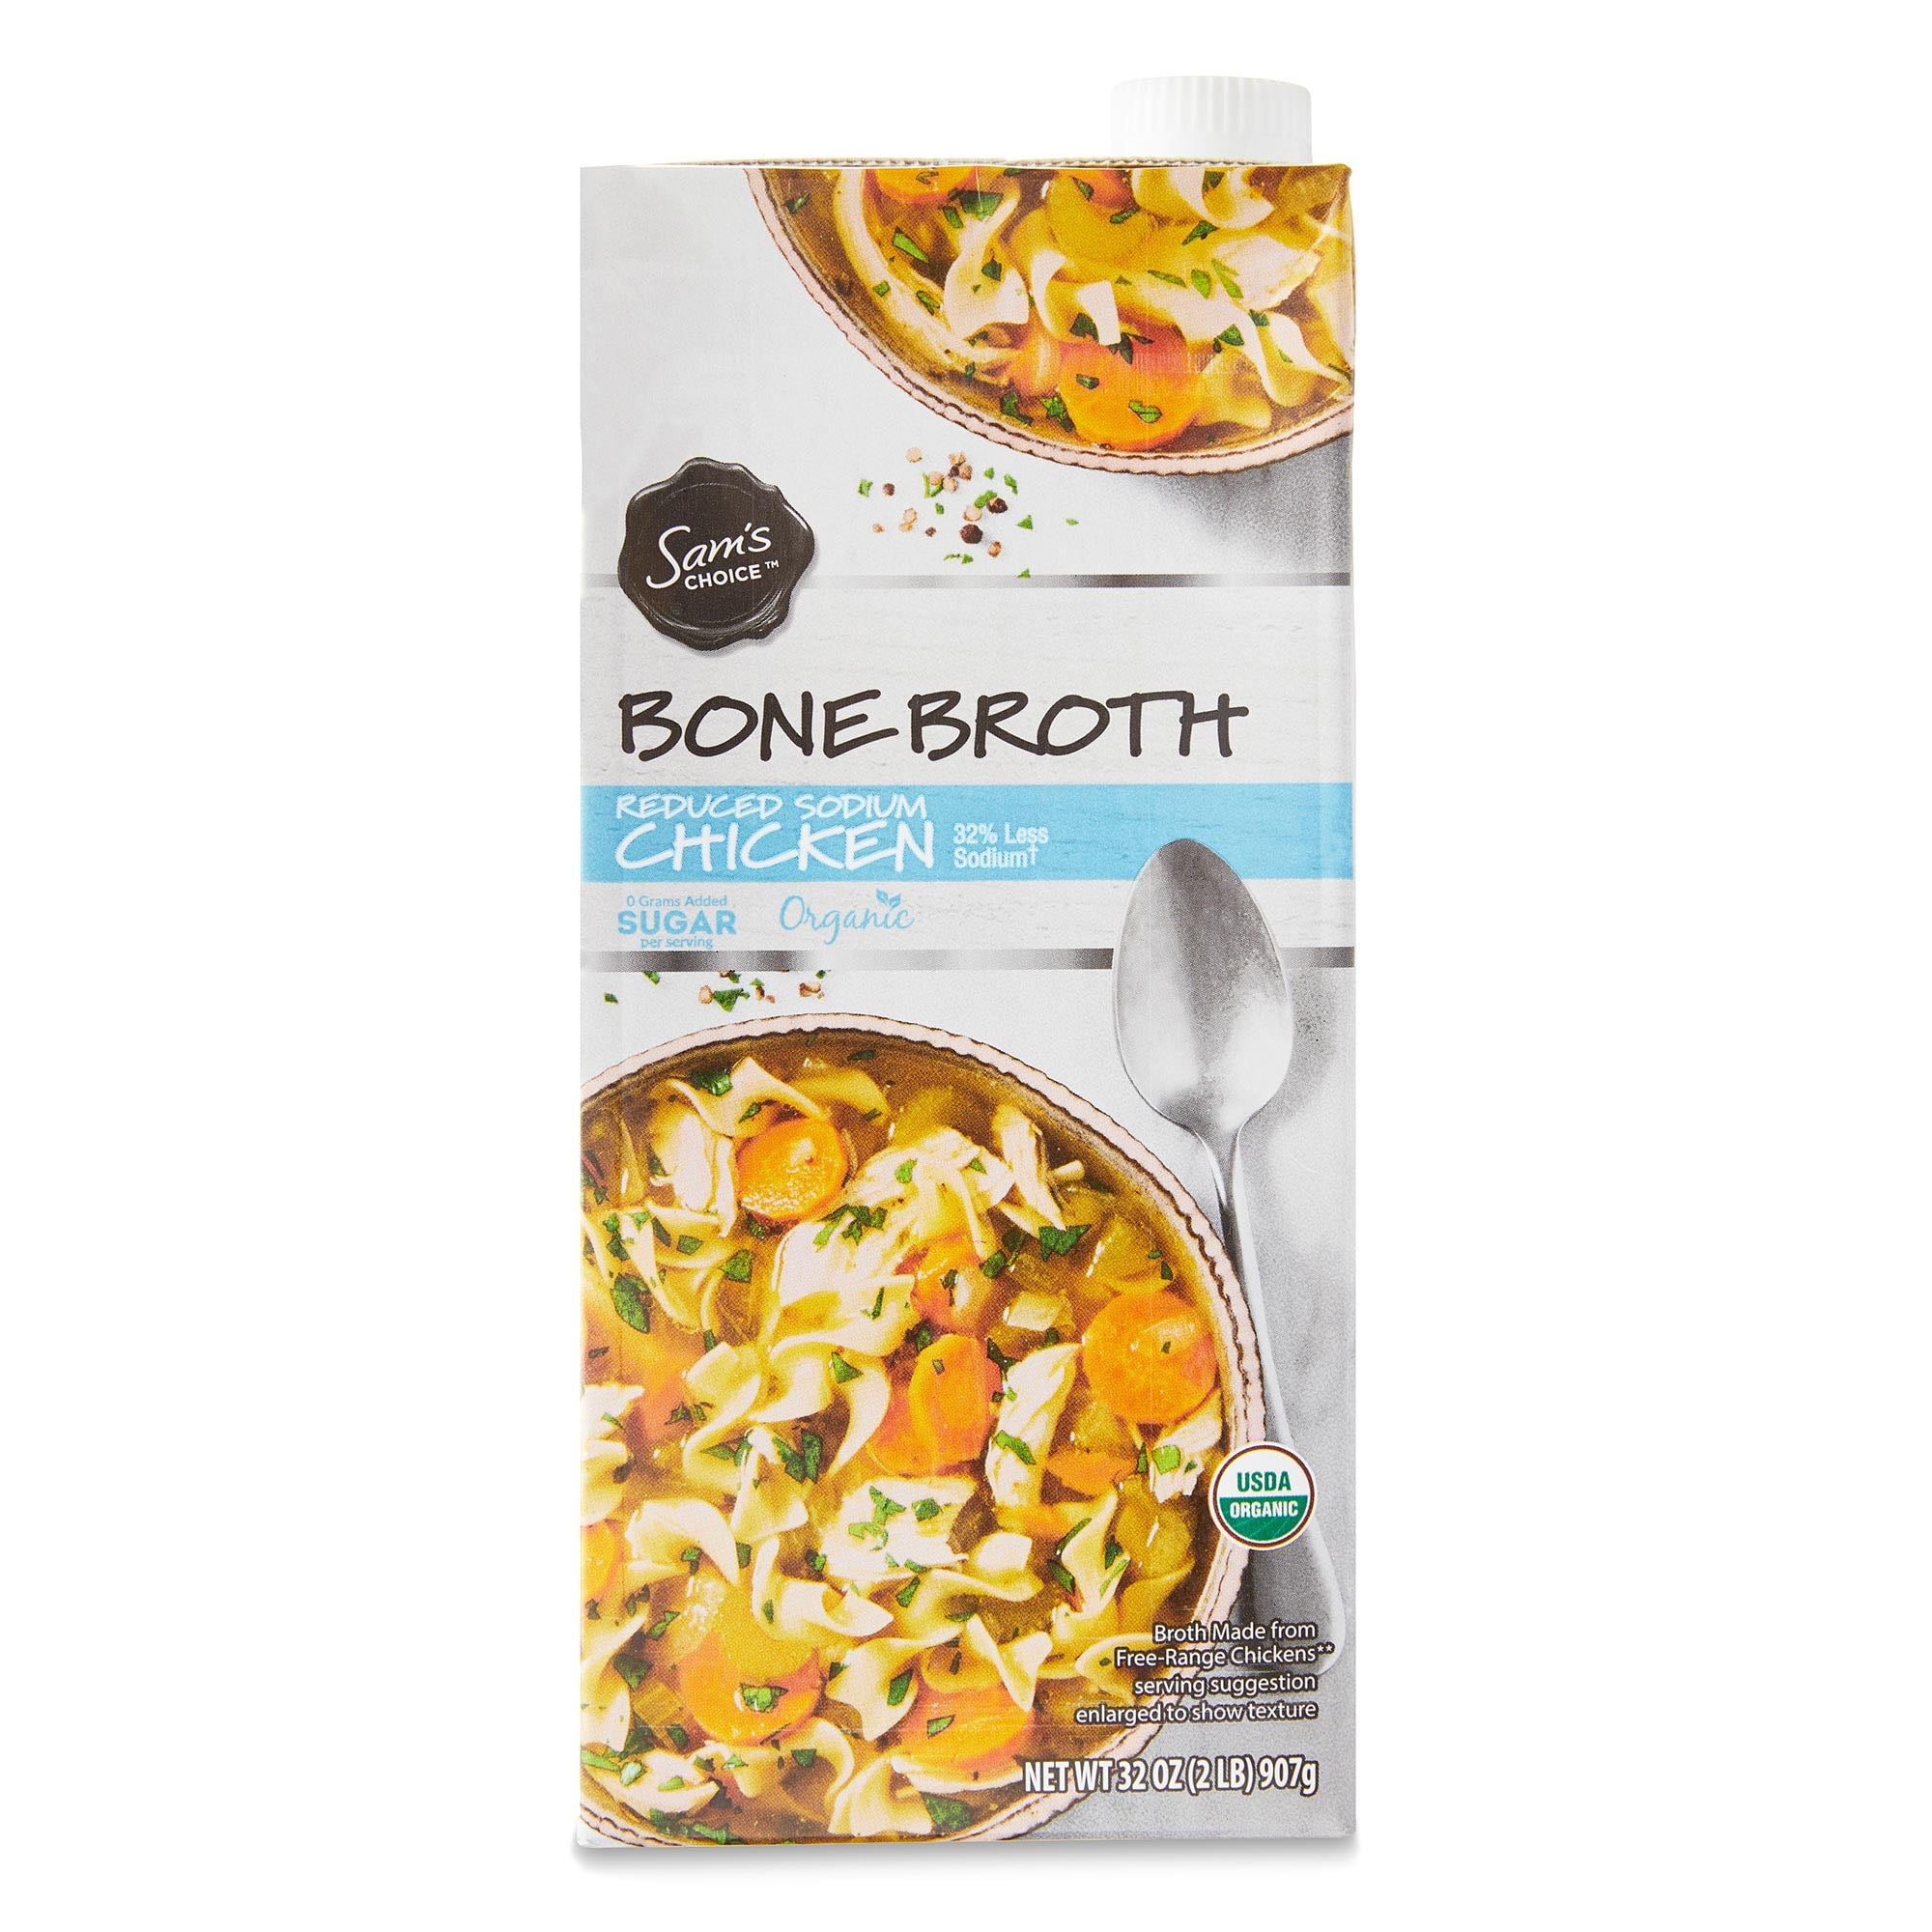 Sam's Choice Bone Broth Reduced Sodium, Chicken, 32 oz